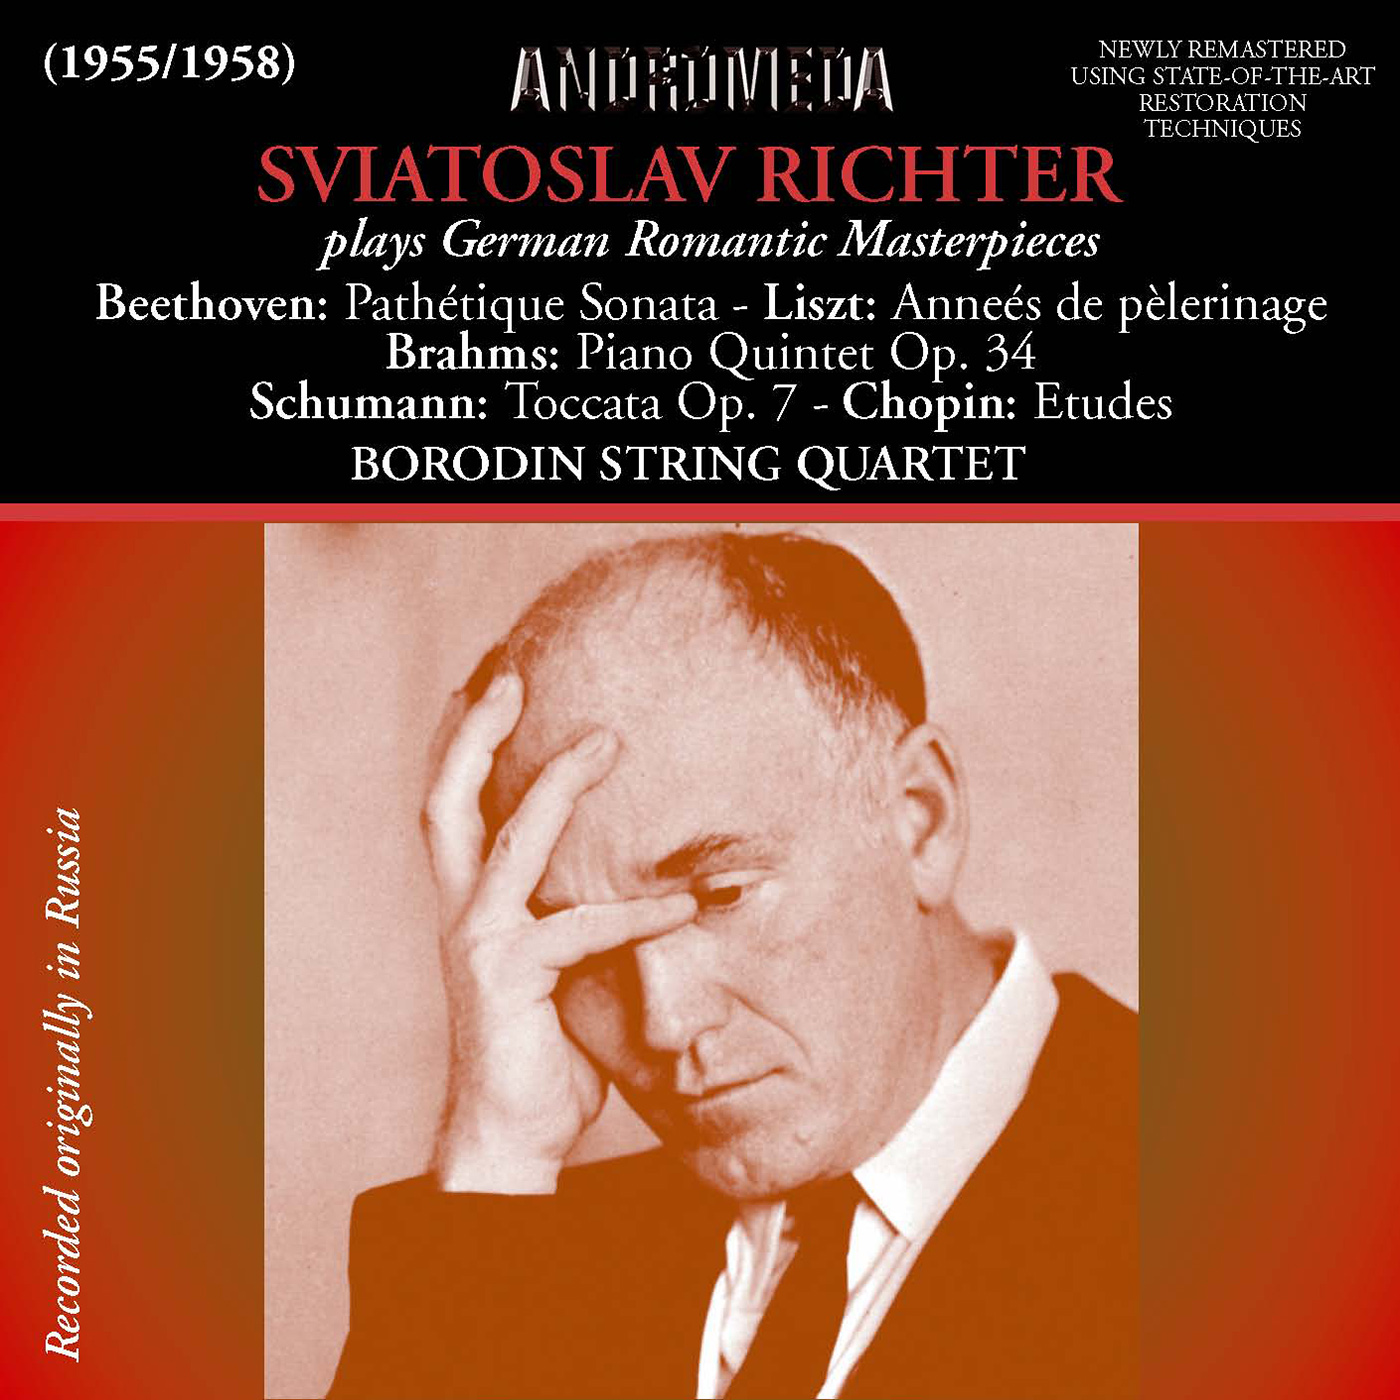 Piano Recital: Richter, Sviatoslav - BEETHOVEN, L. van / LISZT, F. / BRAHMS, J. / CHOPIN, F. / SCHUMANN, R. (1955, 1958)